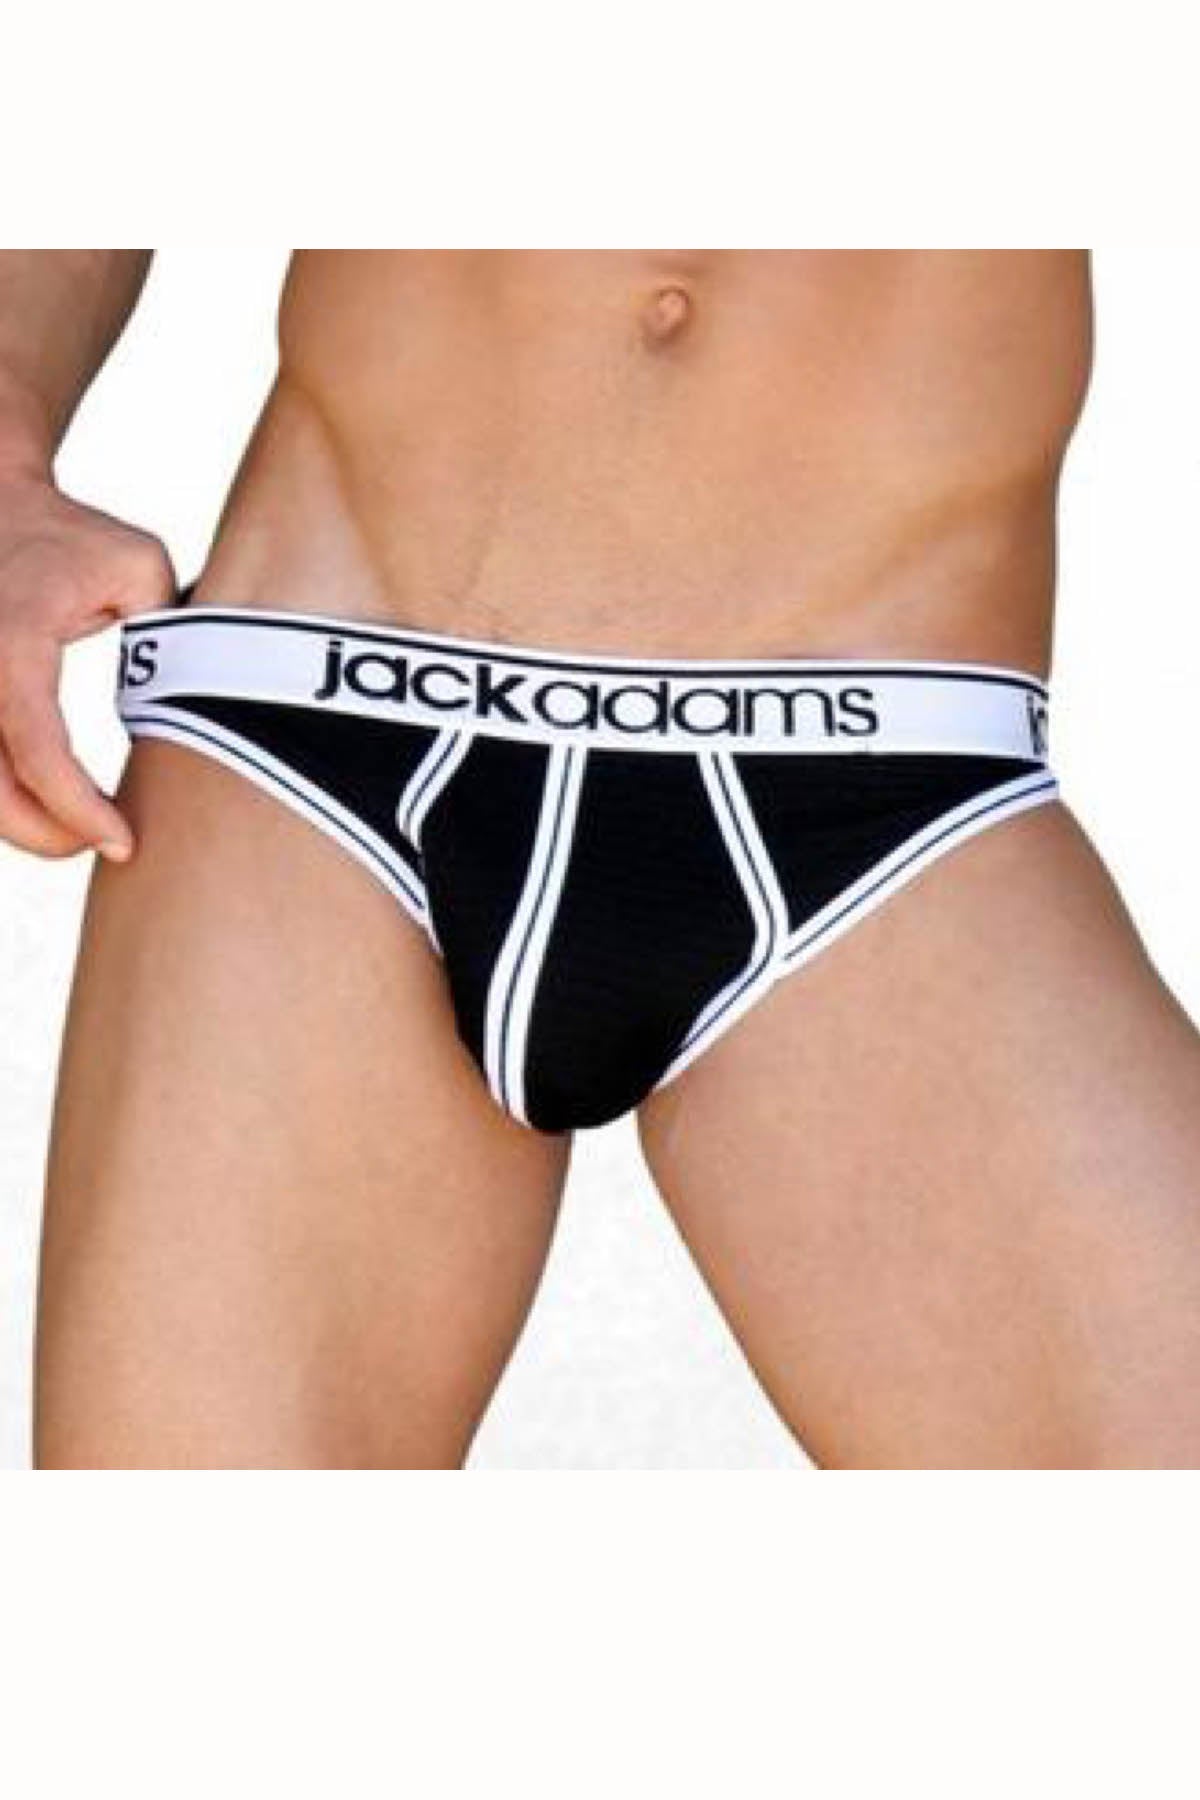 Jack Adams Black & White Varsity Mesh Jockstrap